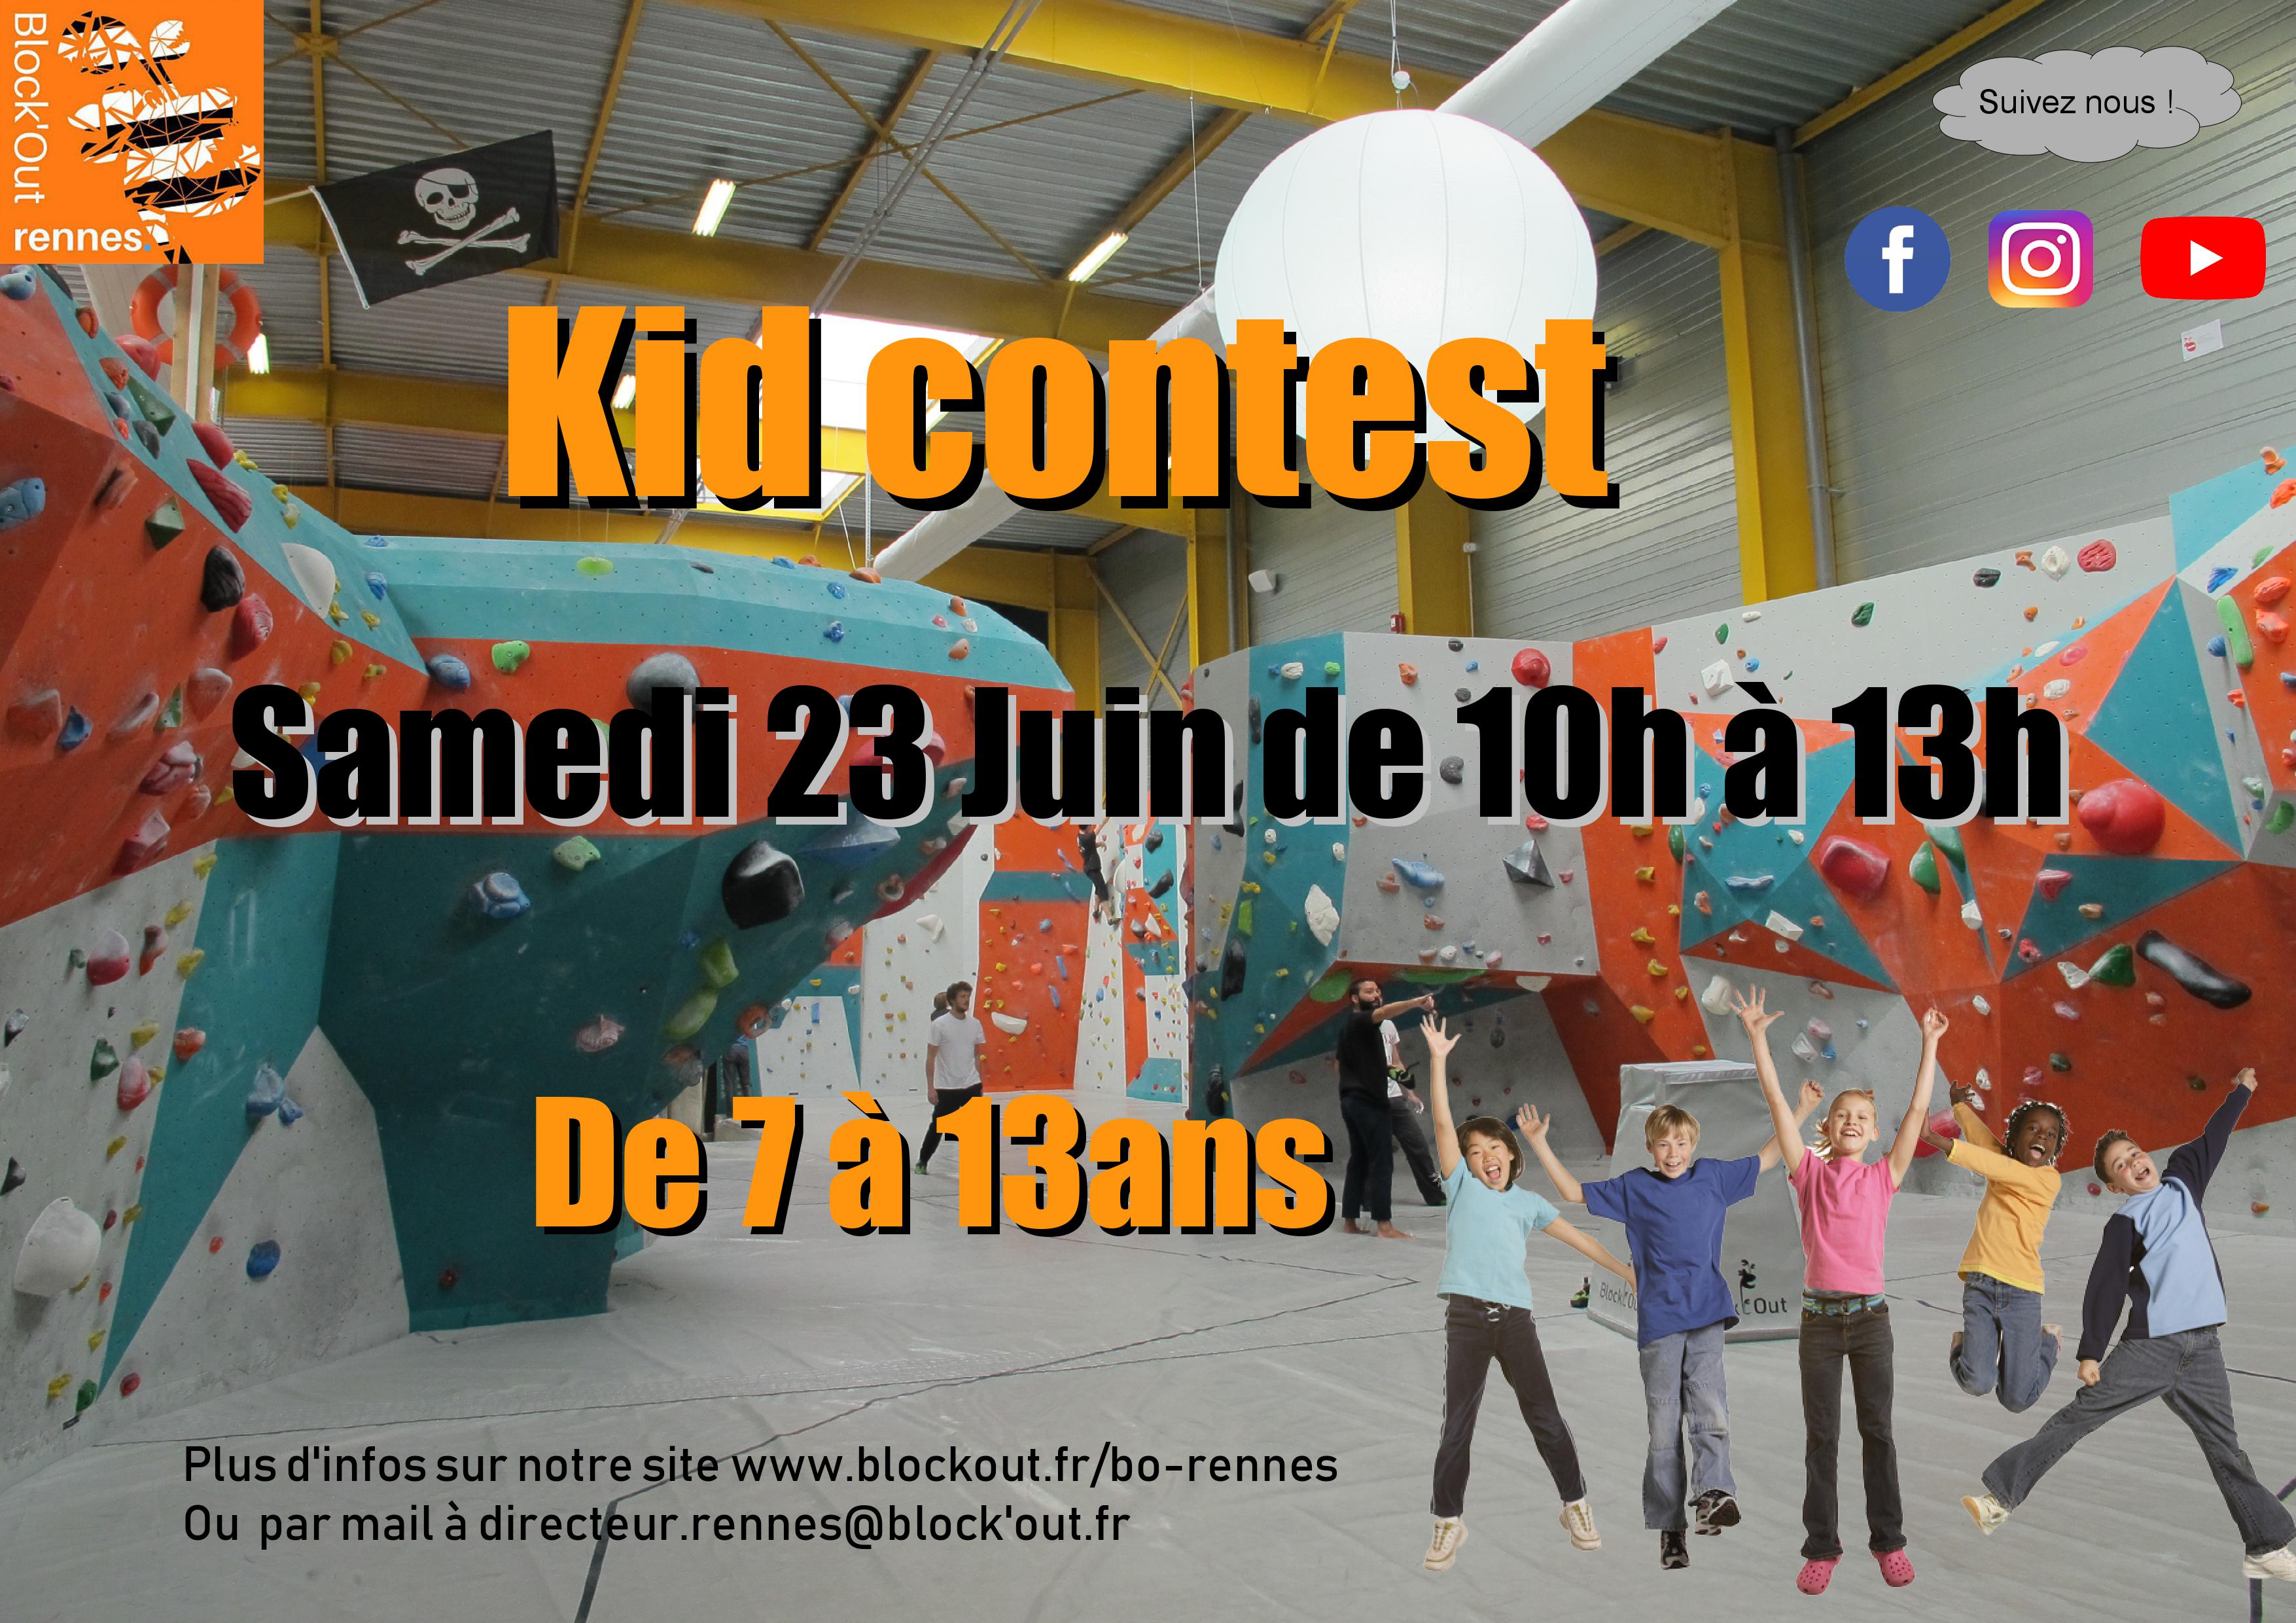 Kid contest